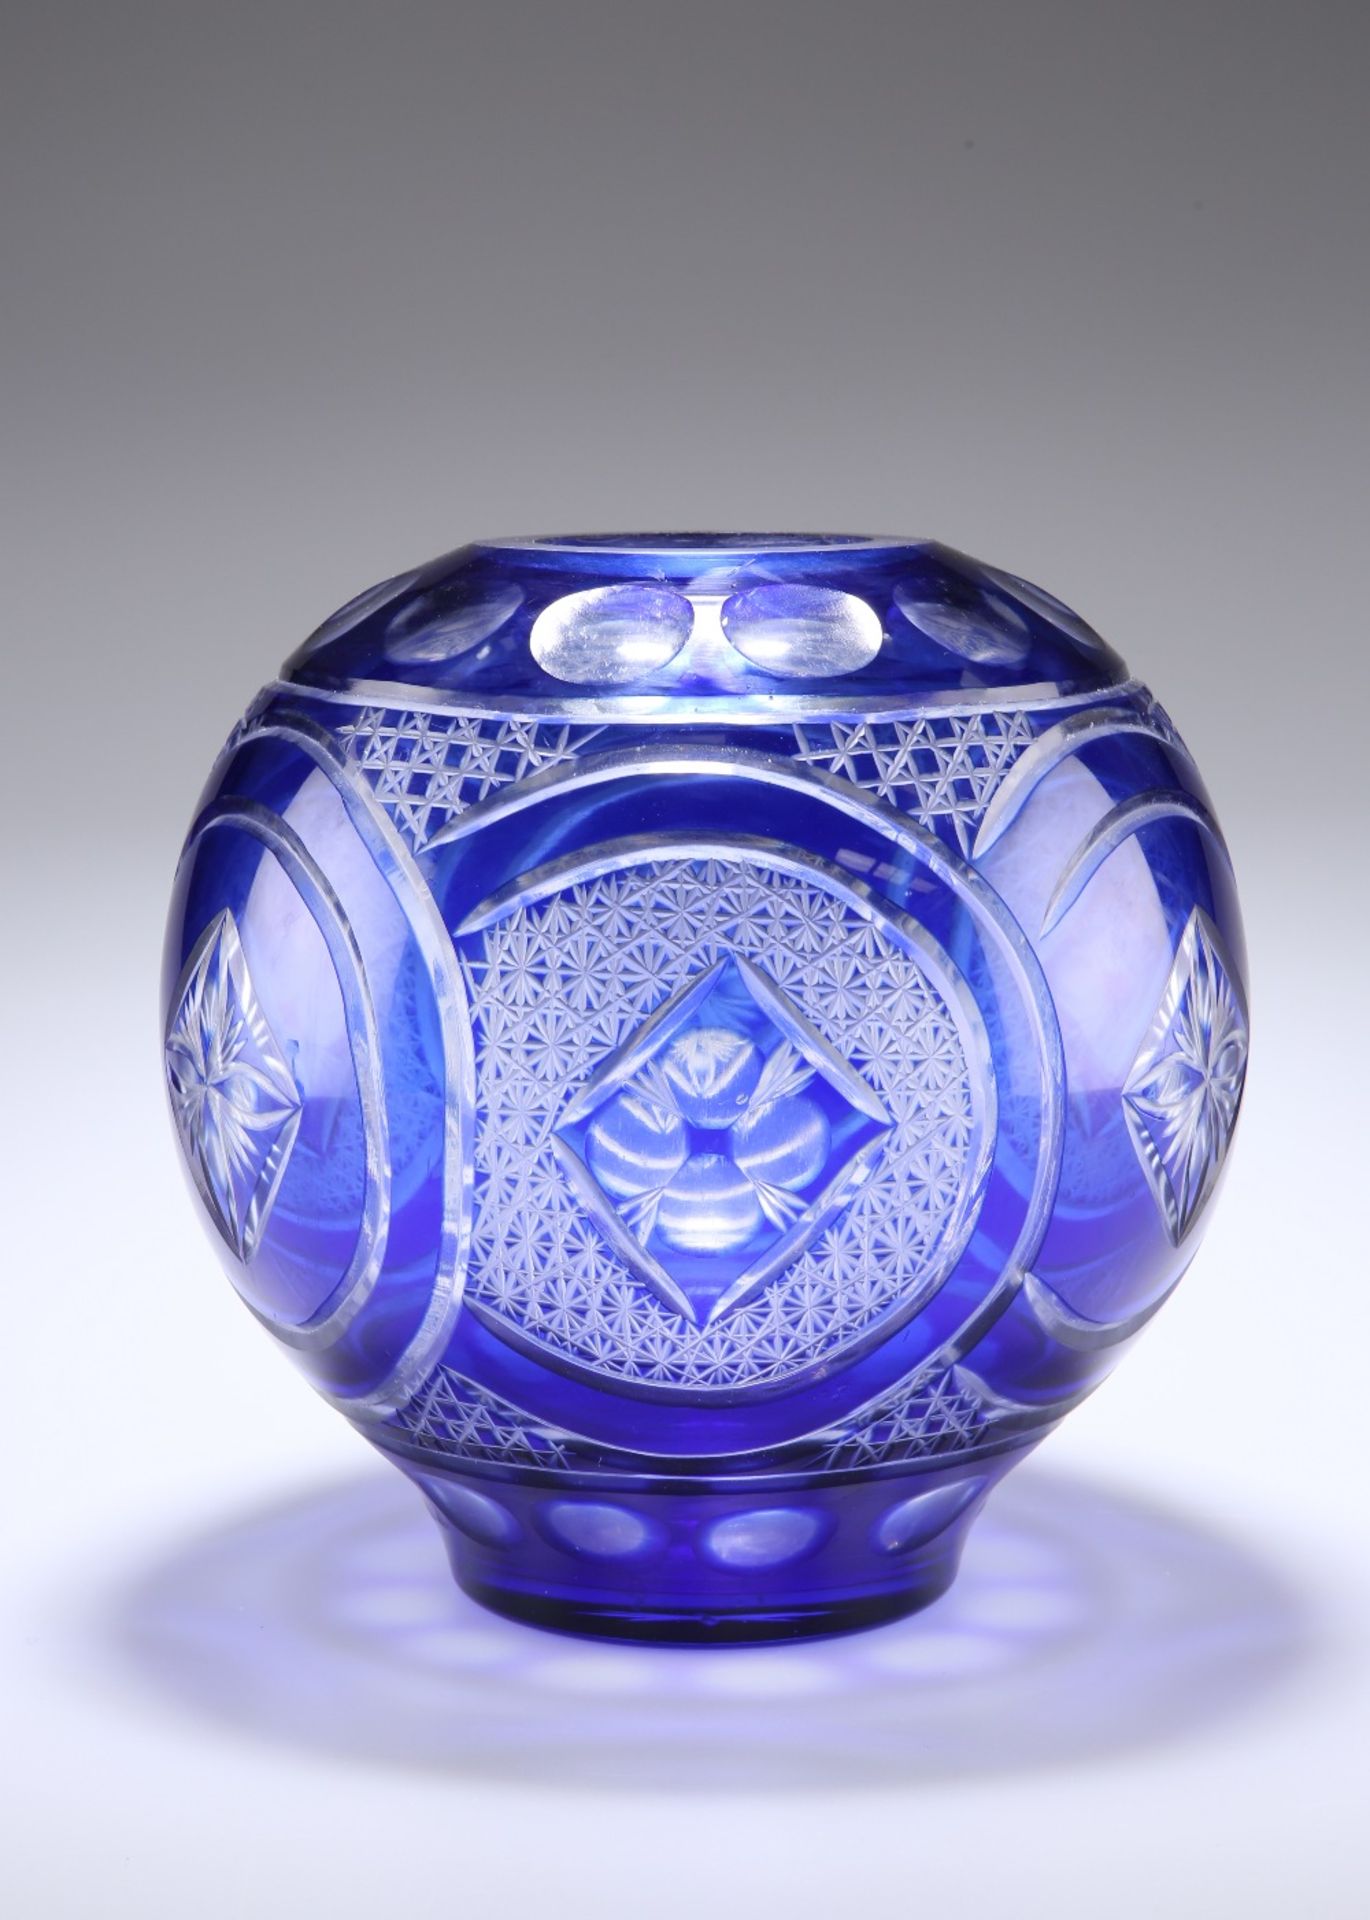 A LARGE BOHEMIAN BLUE OVERLAY GLASS VASE - Image 2 of 2